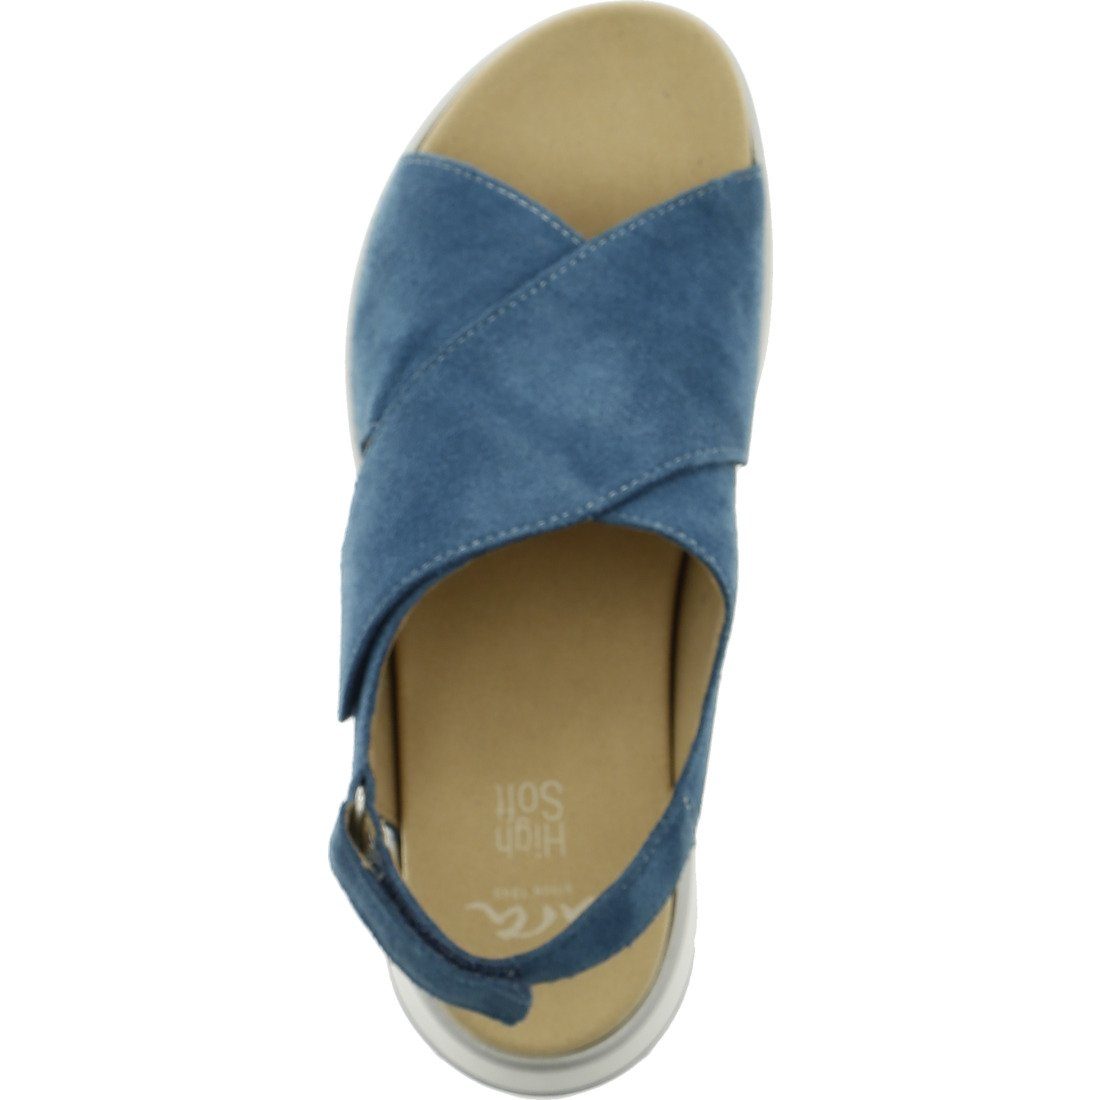 Schuhe, Sandalette Sandalette Ara Sapporo Ara - 048223 Rauleder Damen blau